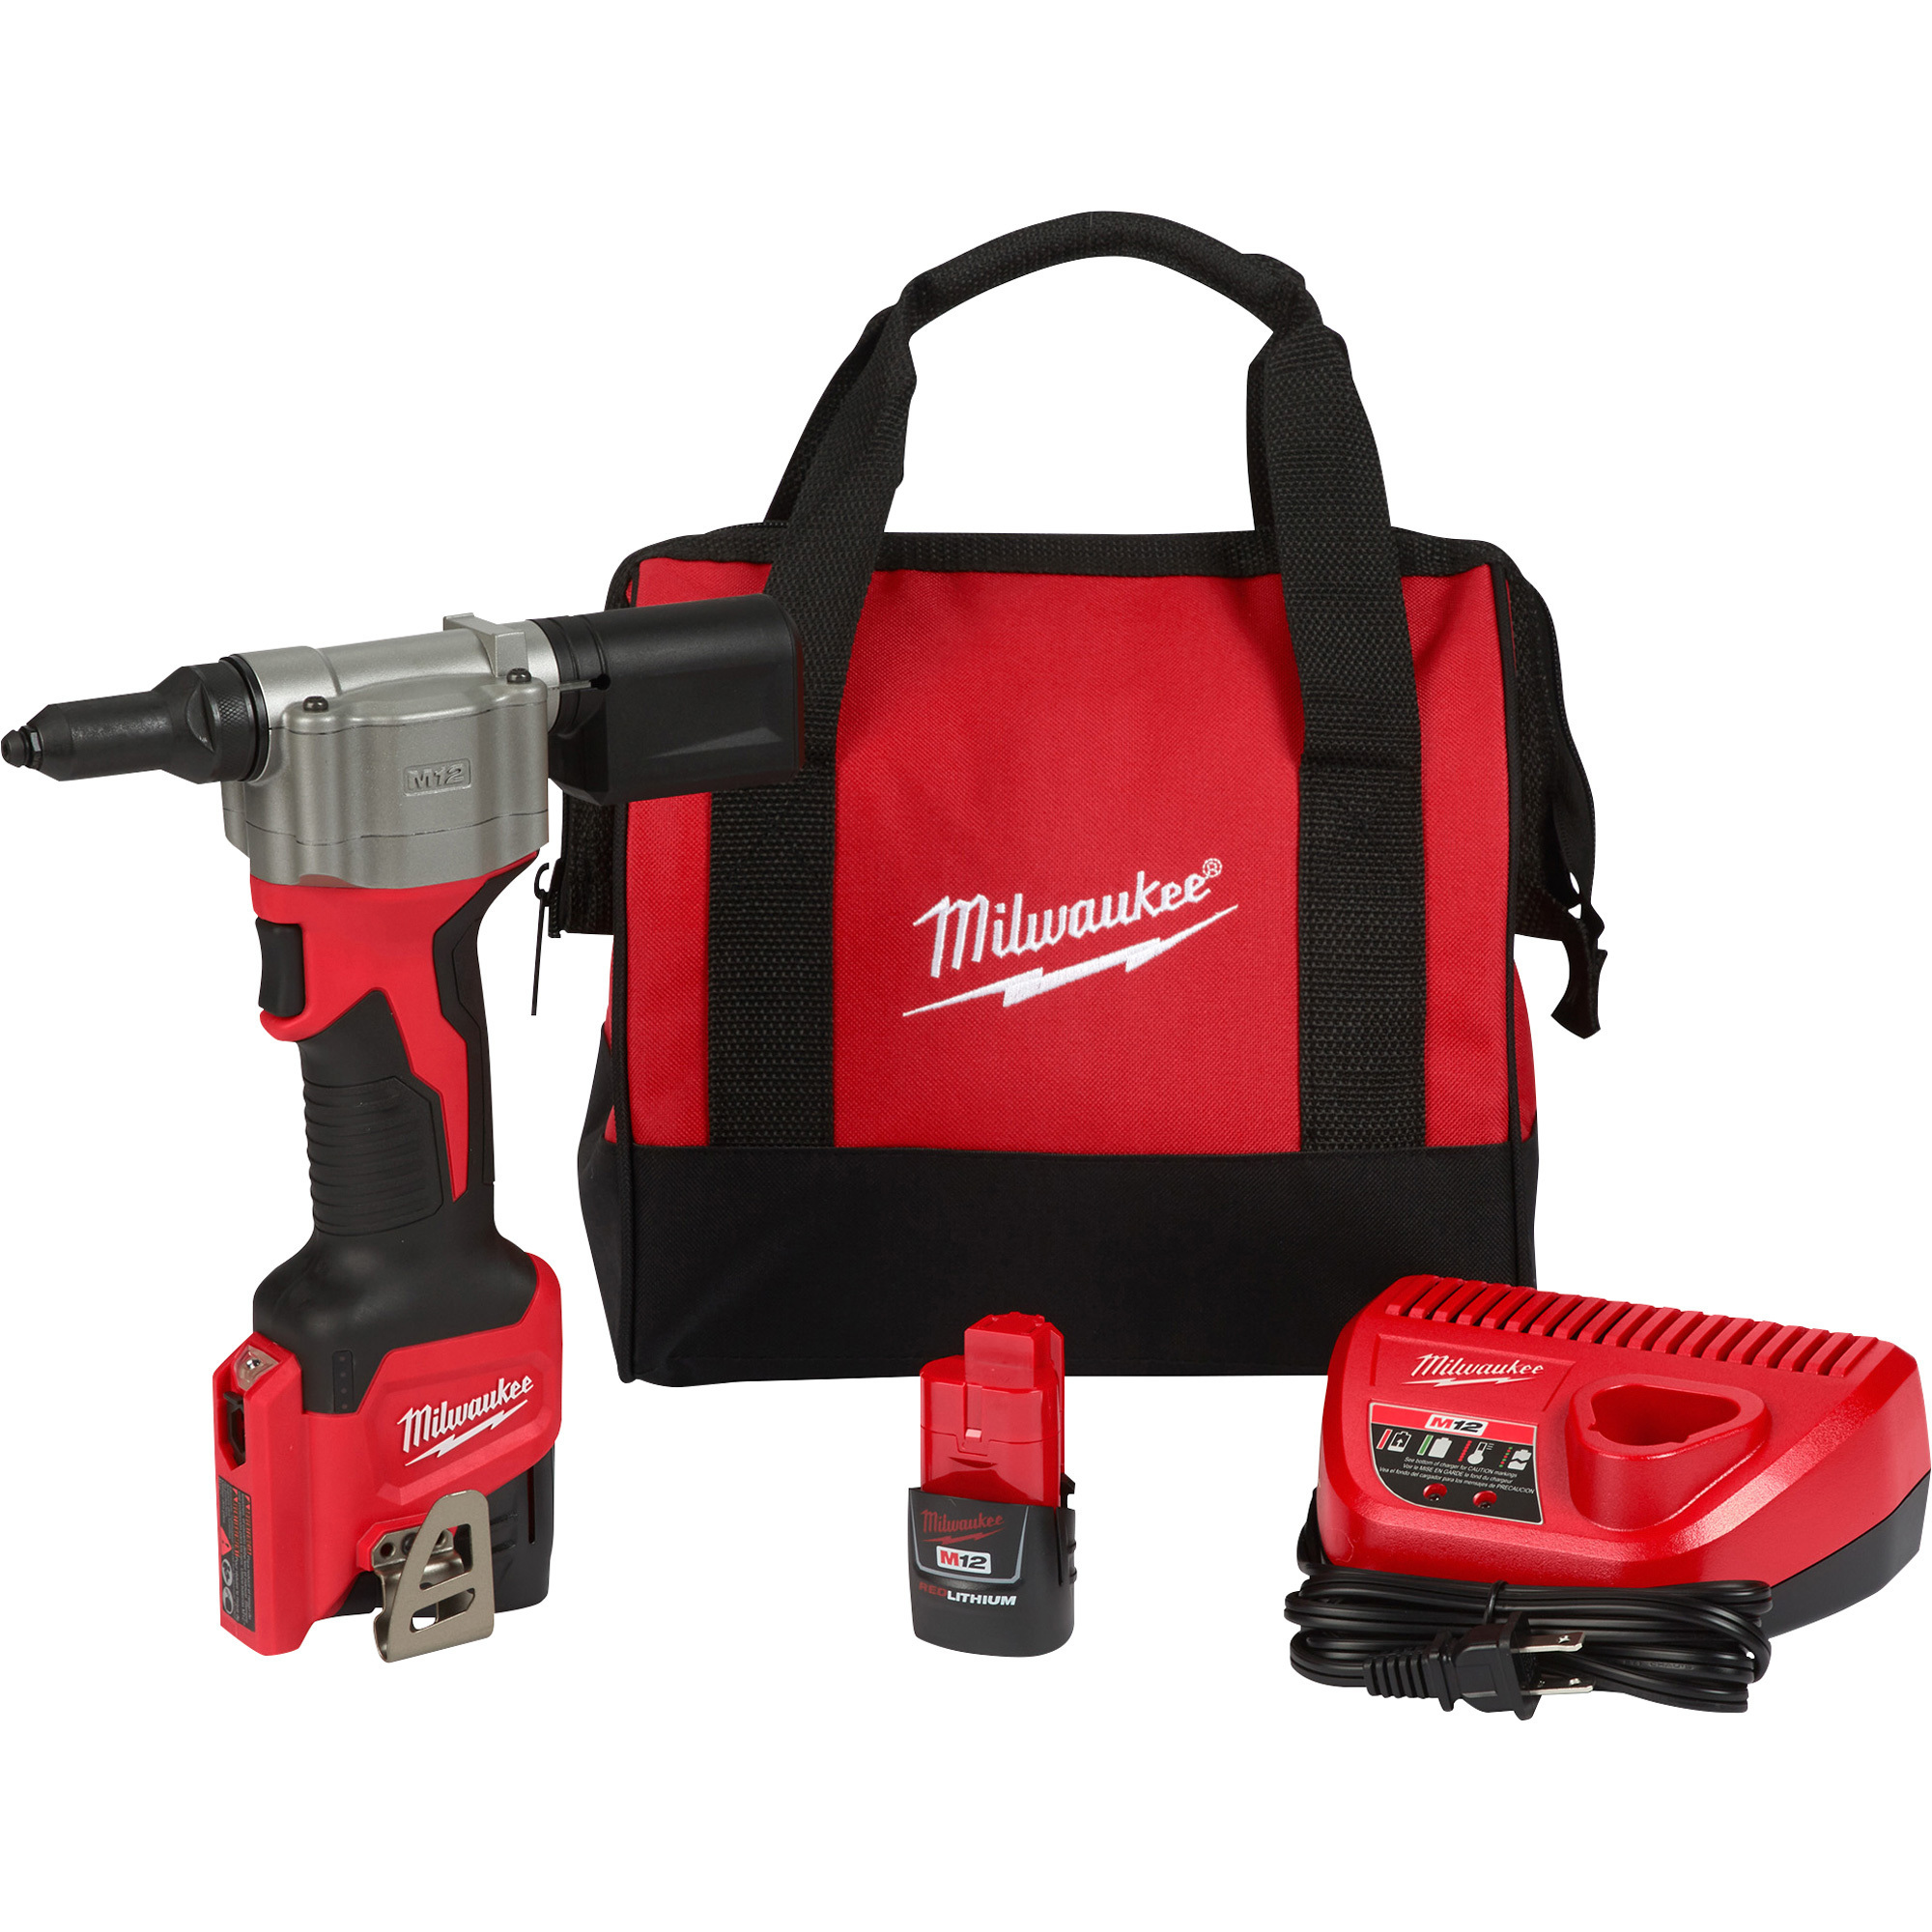 Milwaukee M12 Cordless Rivet Tool Kit, 2 Batteries, Model 2550-22